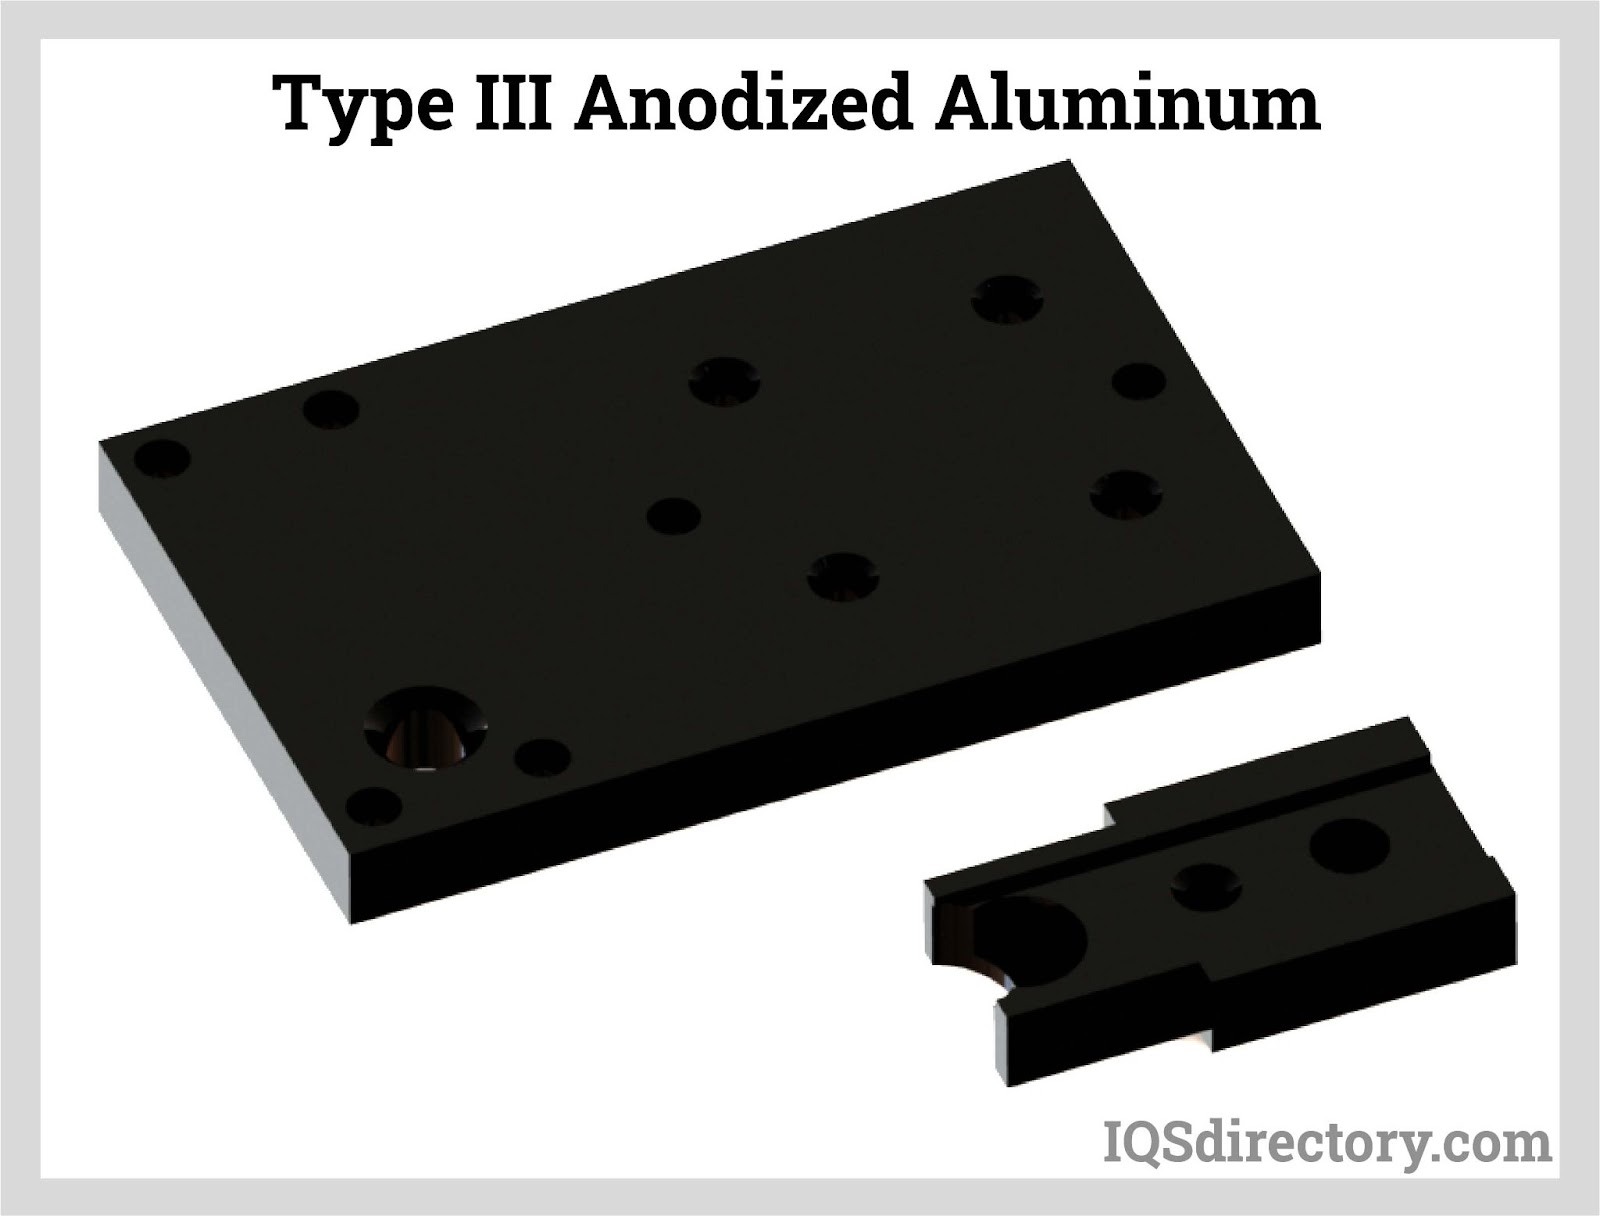 Type III Anodized Aluminum